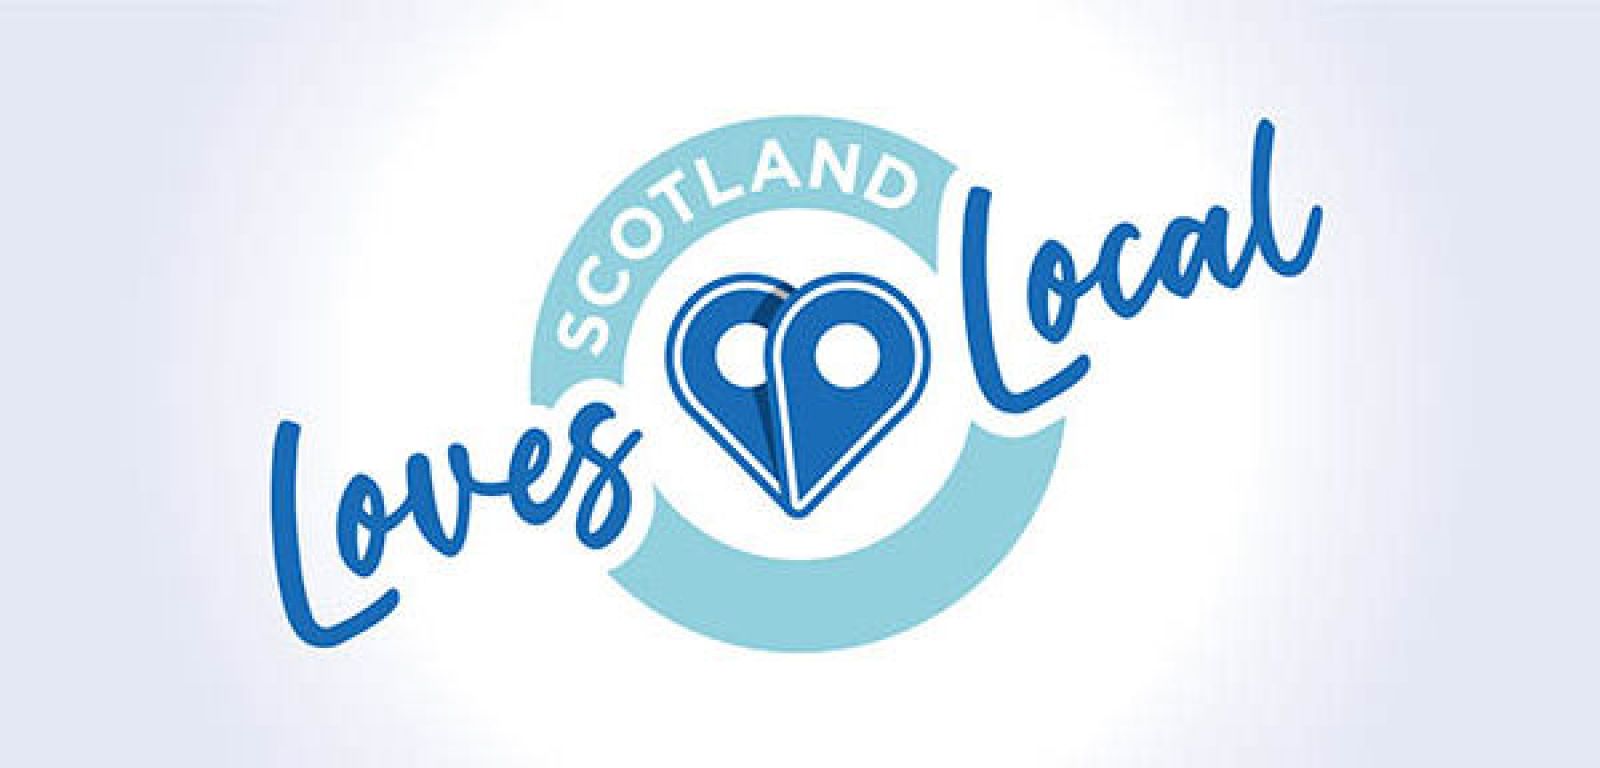 Scotland Loves Local Awards logo banner image